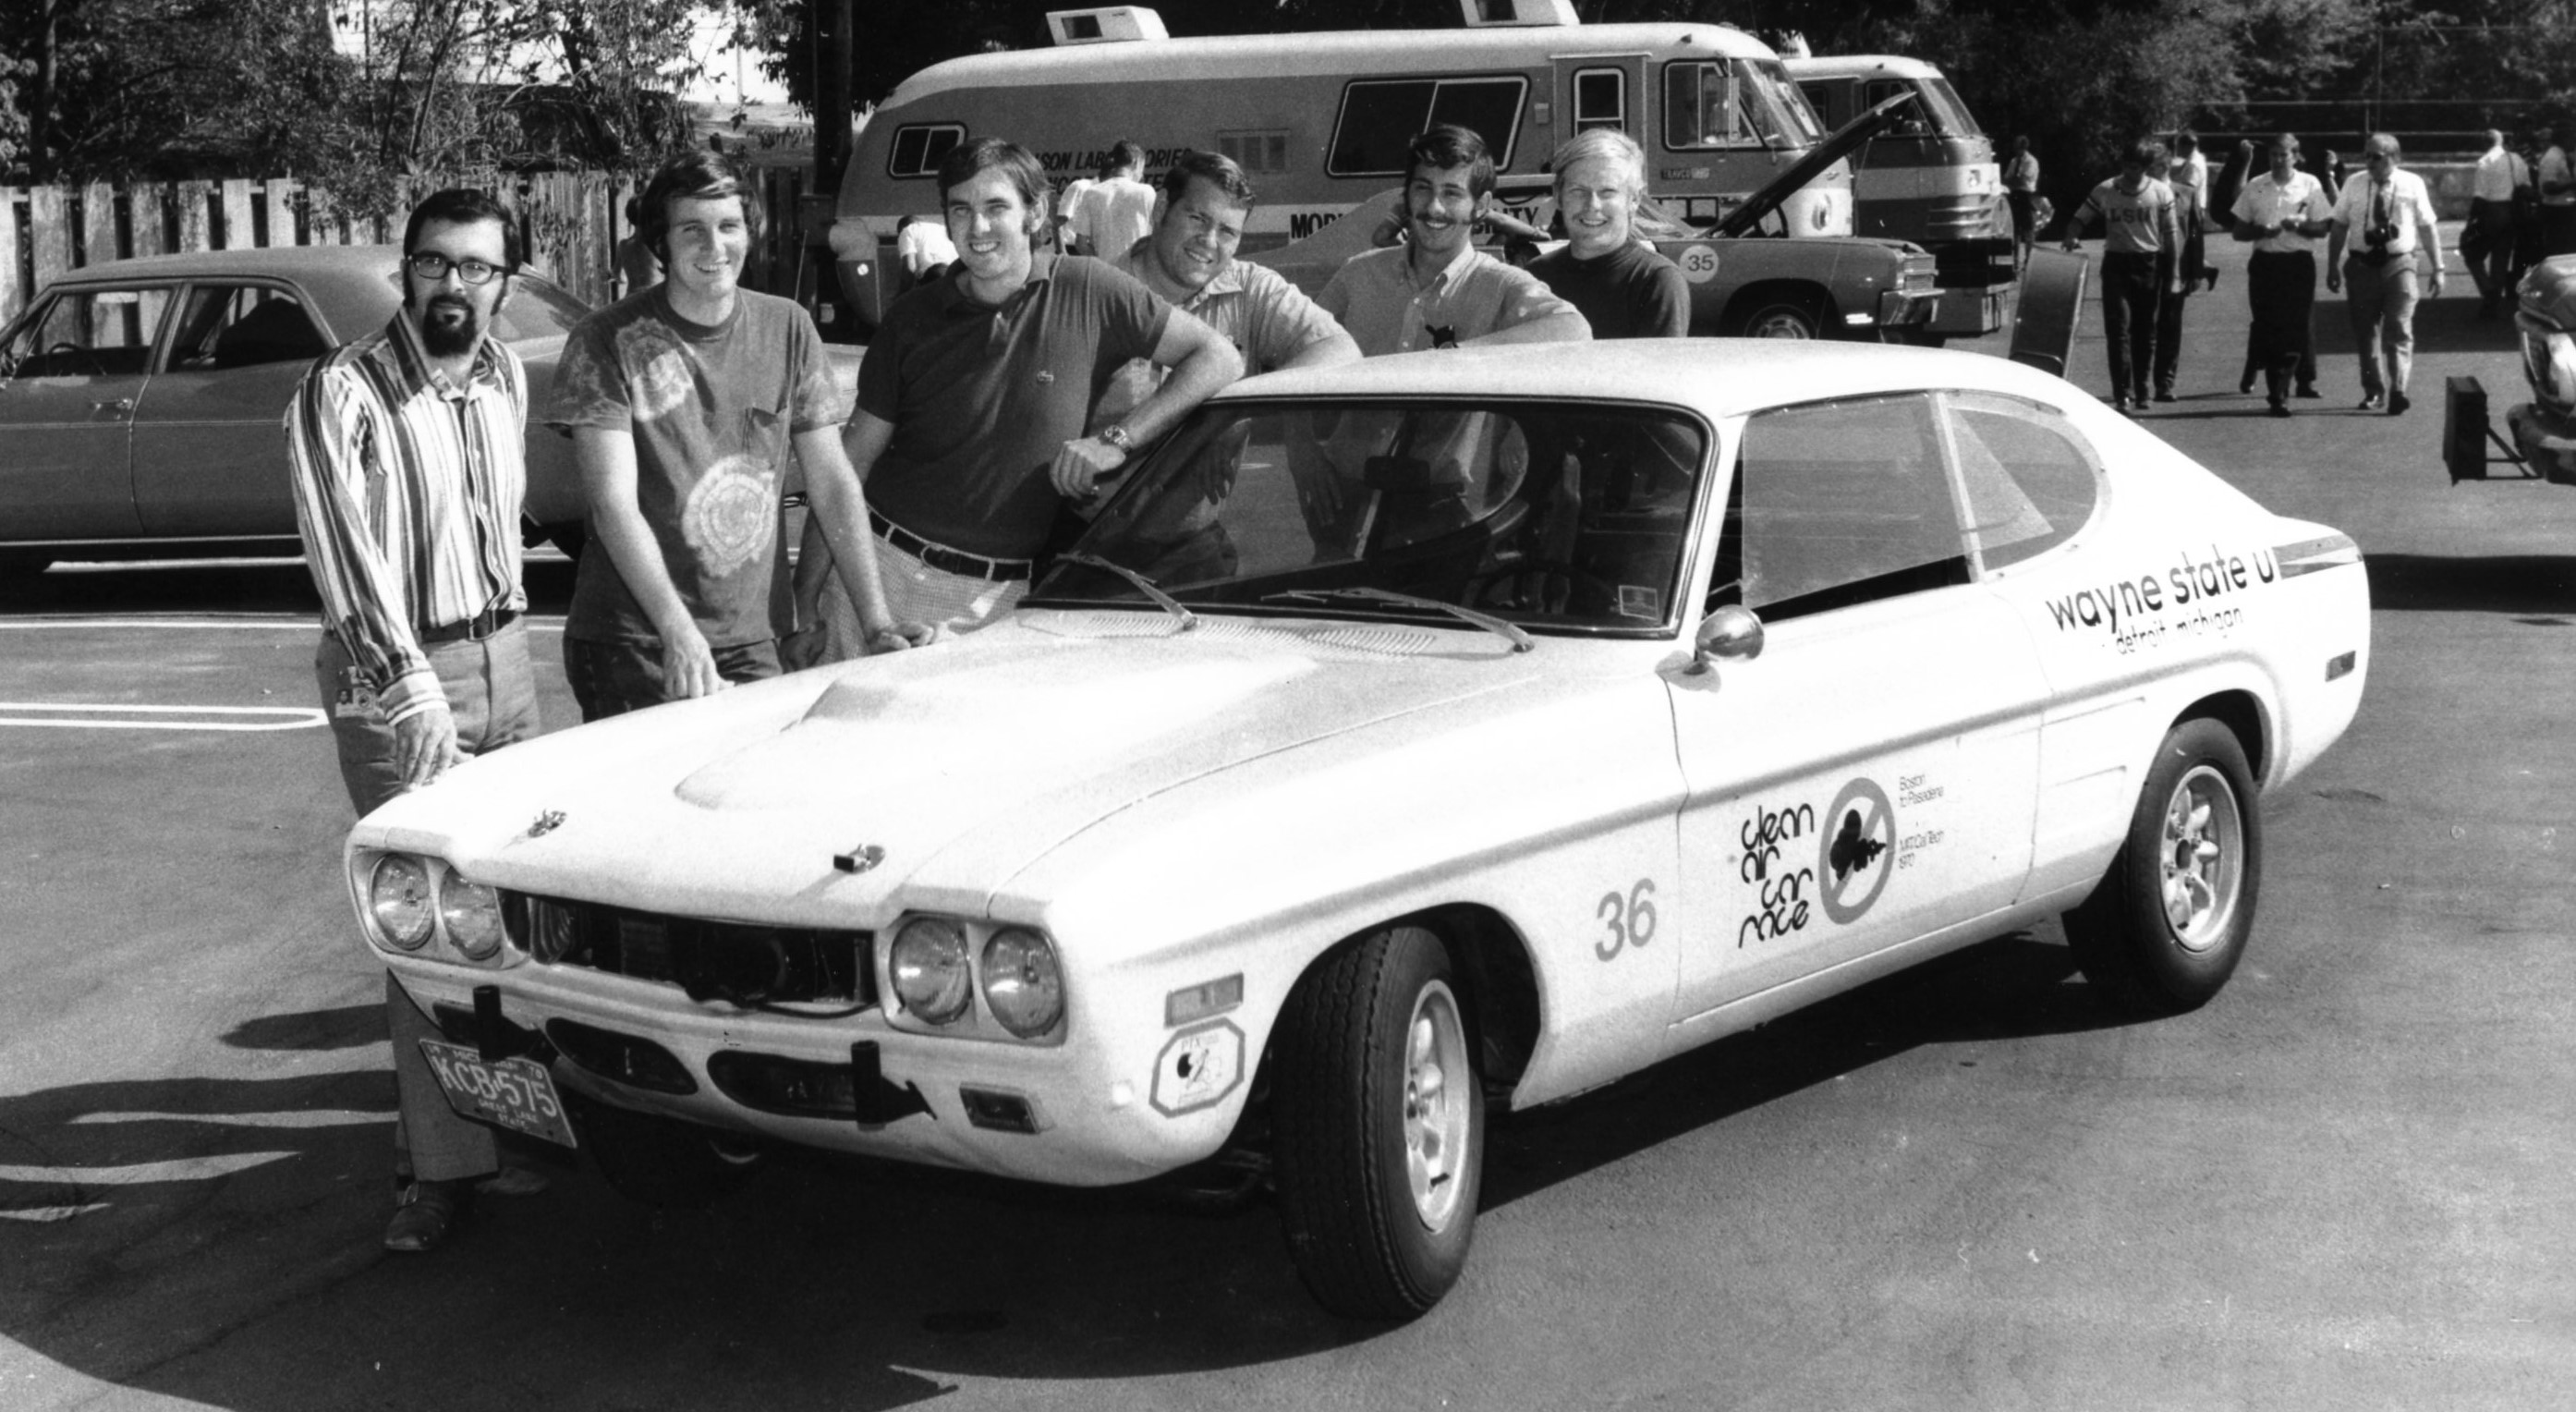 Wayne State won the 1970 Clean Air Race